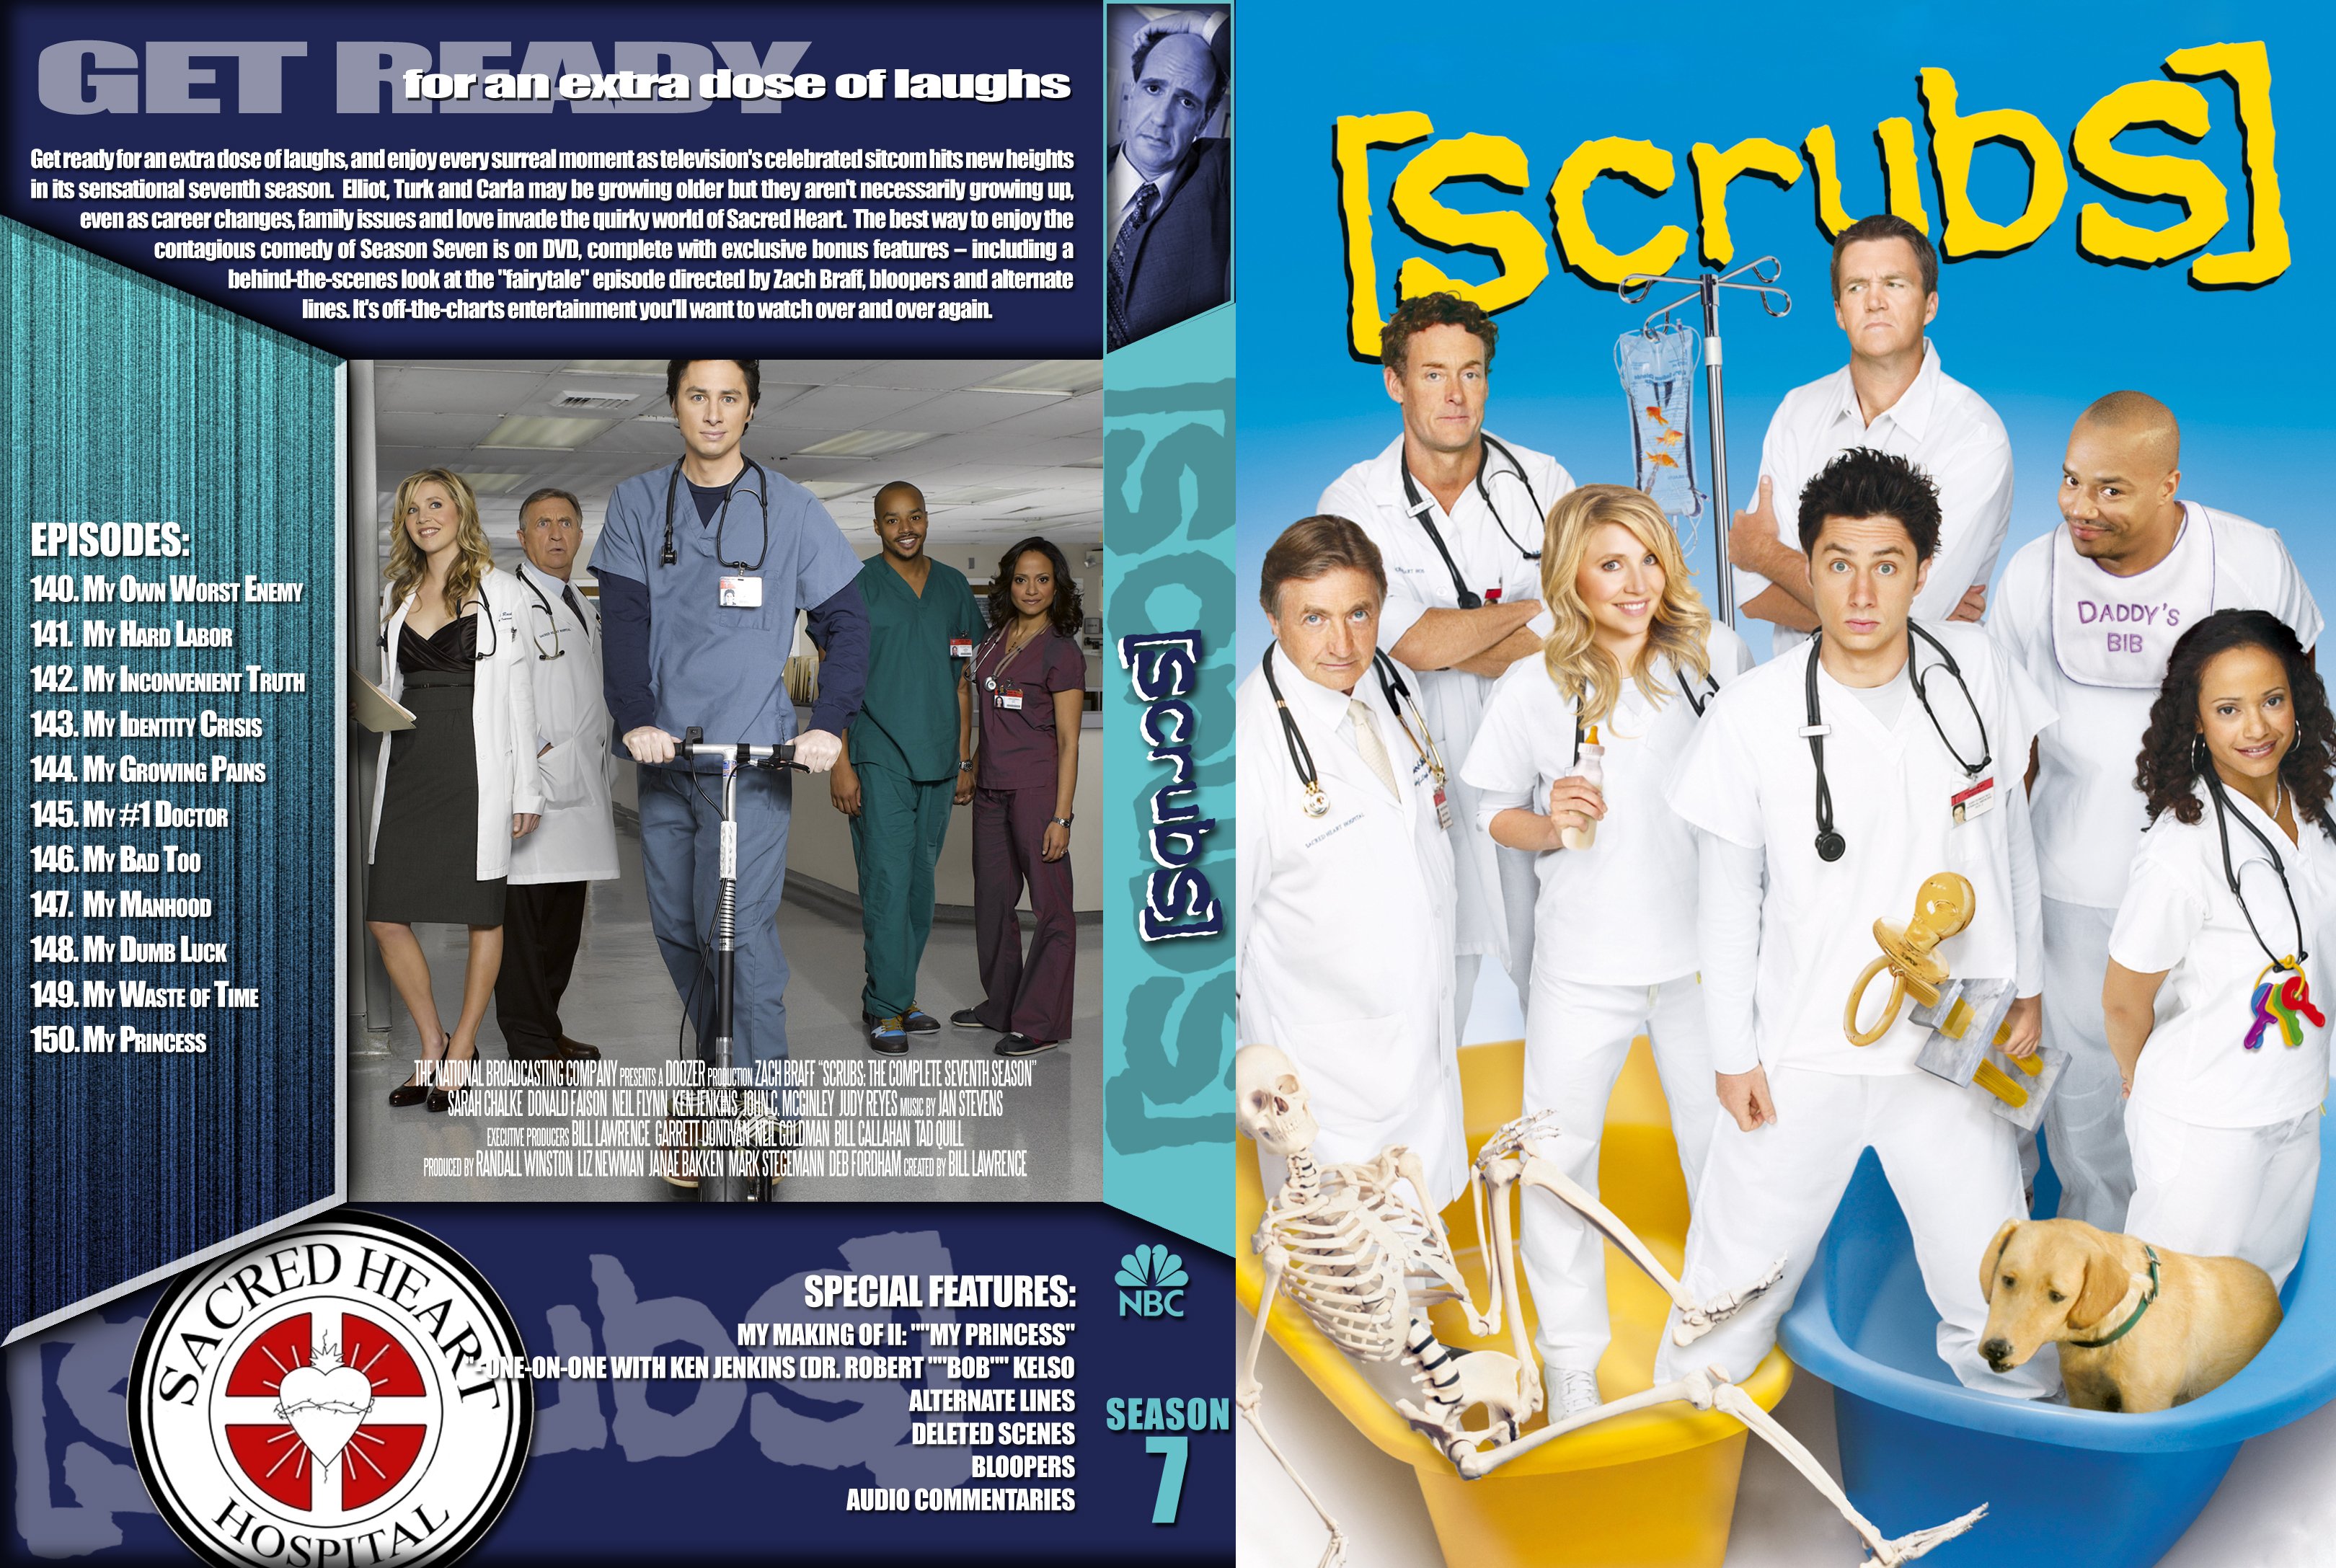 Scrubs 7. Scrubs DVD Cover.